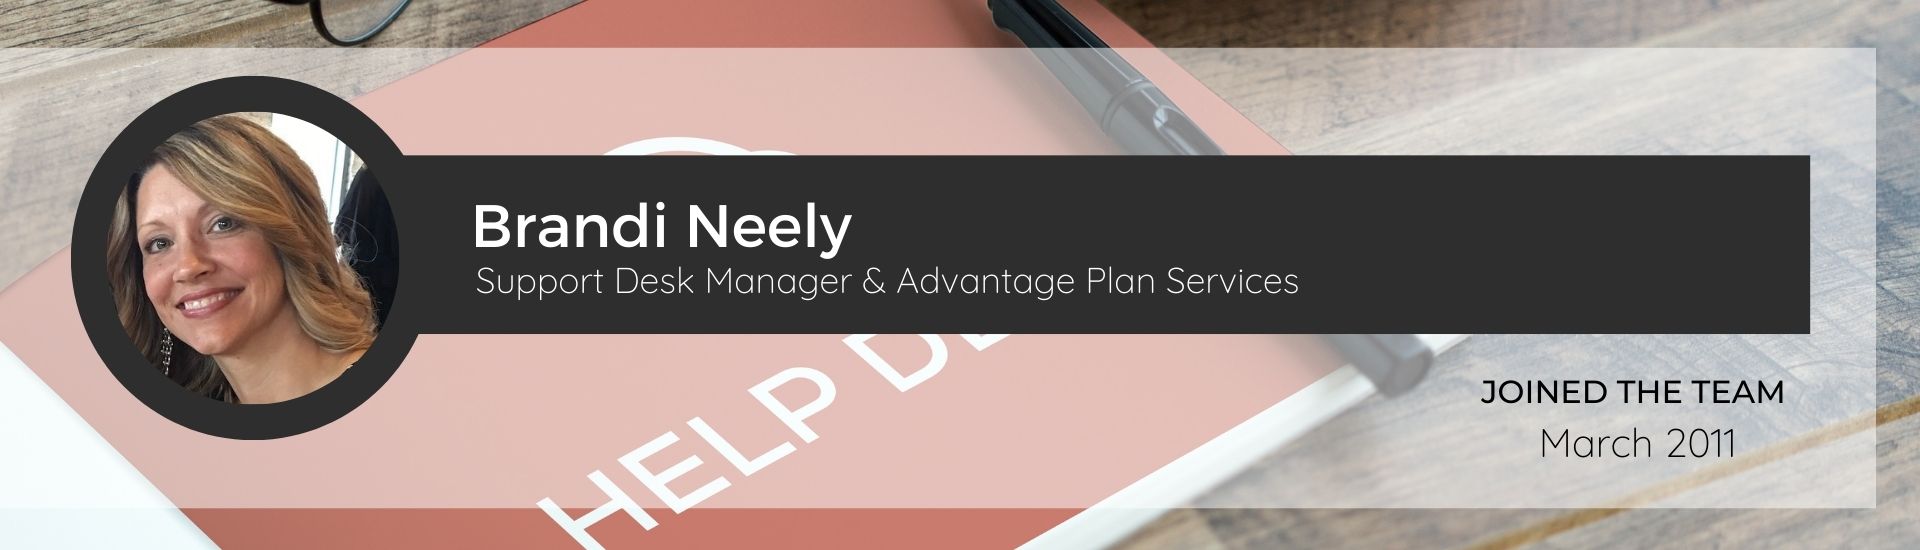 Brandi Neely, Support Desk Manager & Advantage Plan Services